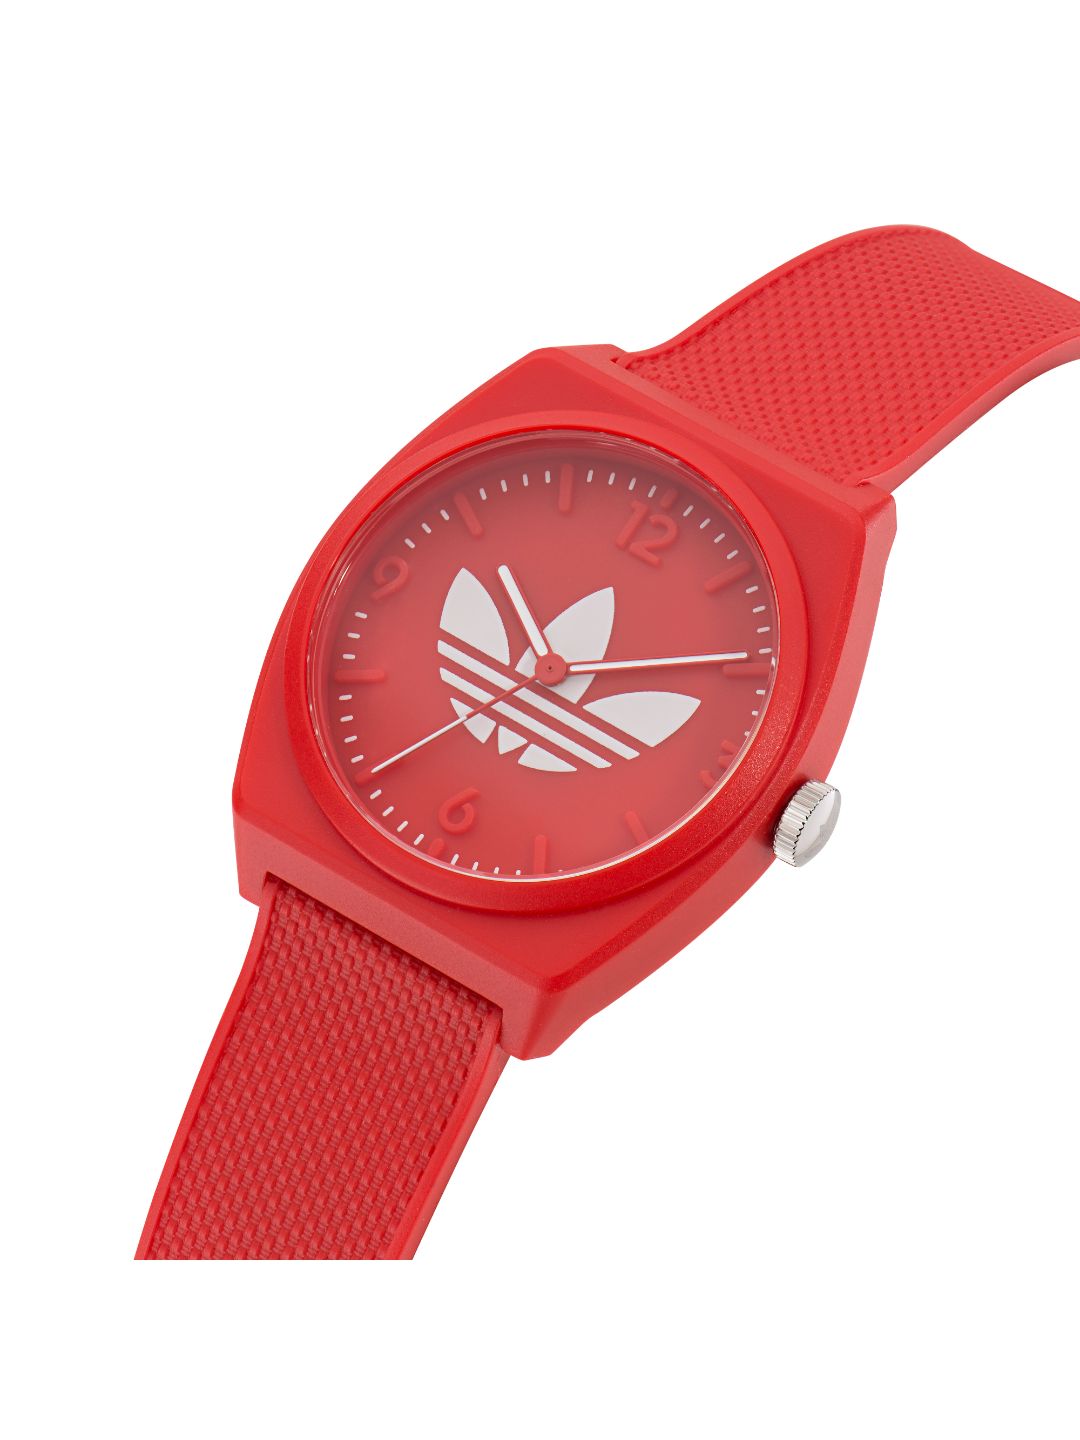 Adidas Originals Red Dial Unisex Watch - AOST23051